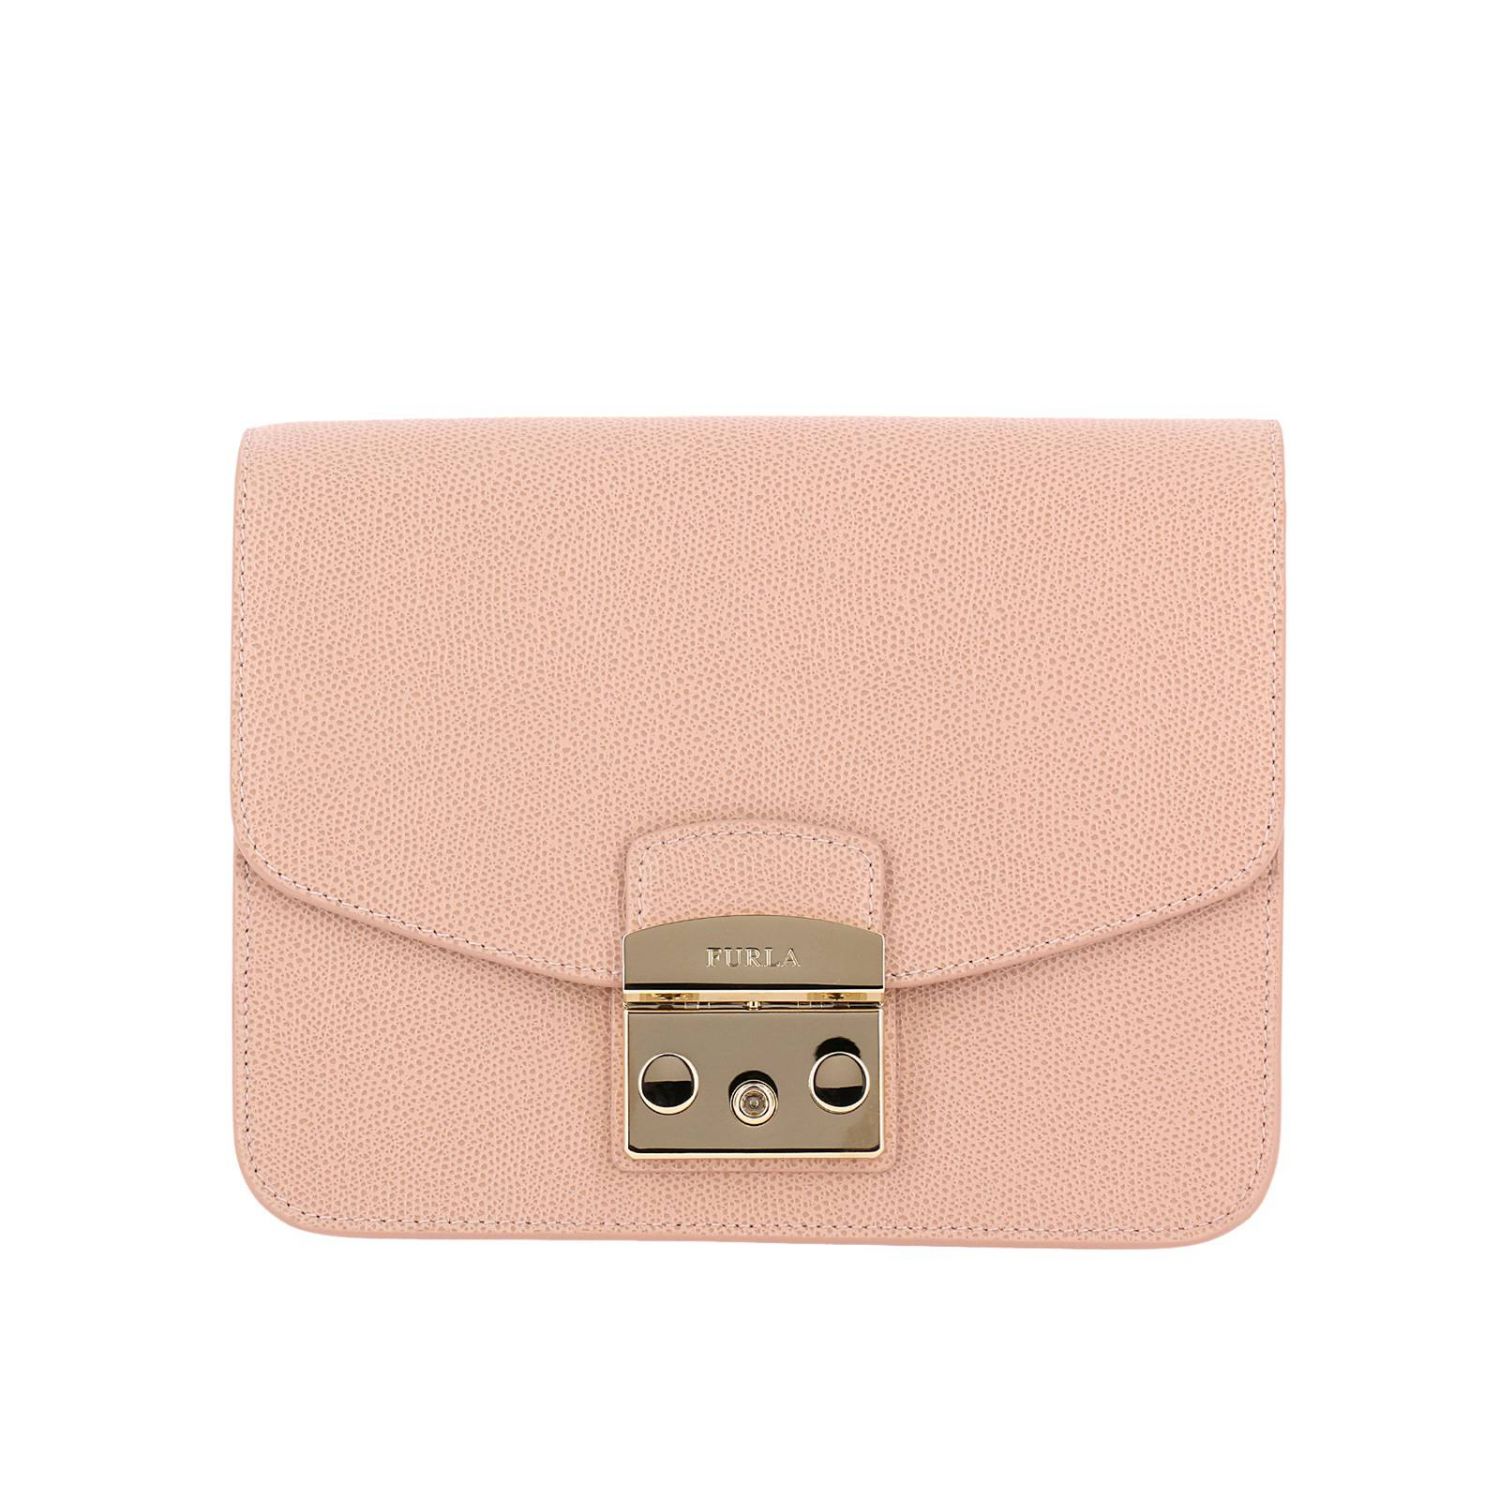 Furla Outlet: Shoulder bag women | Mini Bag Furla Women Blush Pink ...